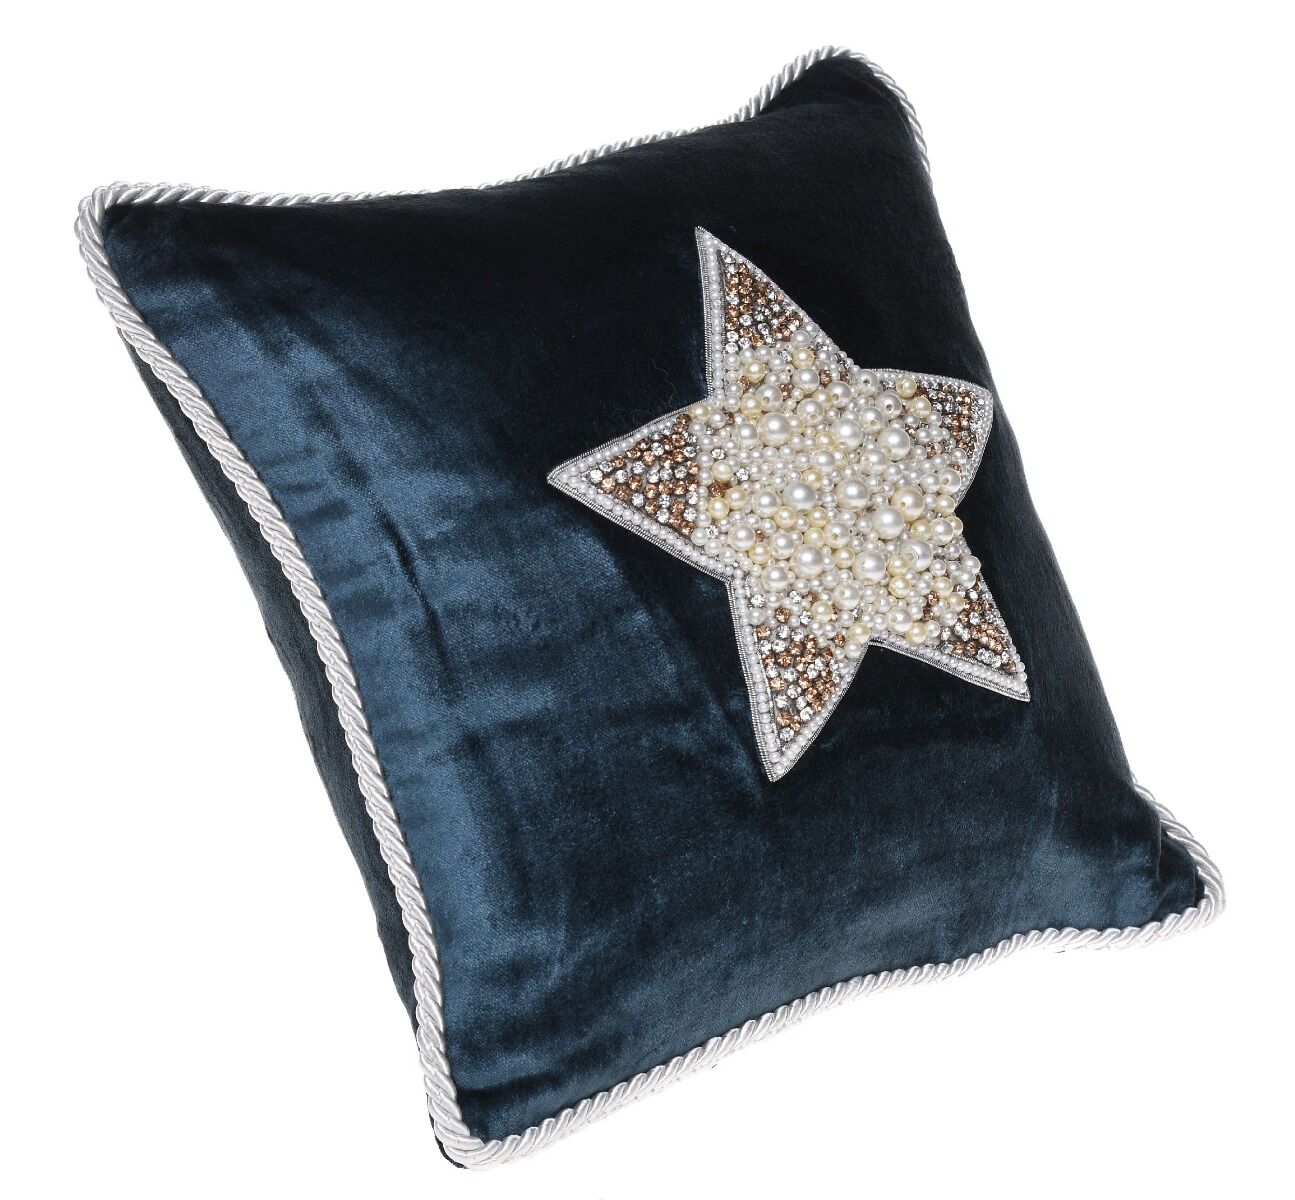 Poduszka Xmas pearl star 30x30cm velvet dark blue